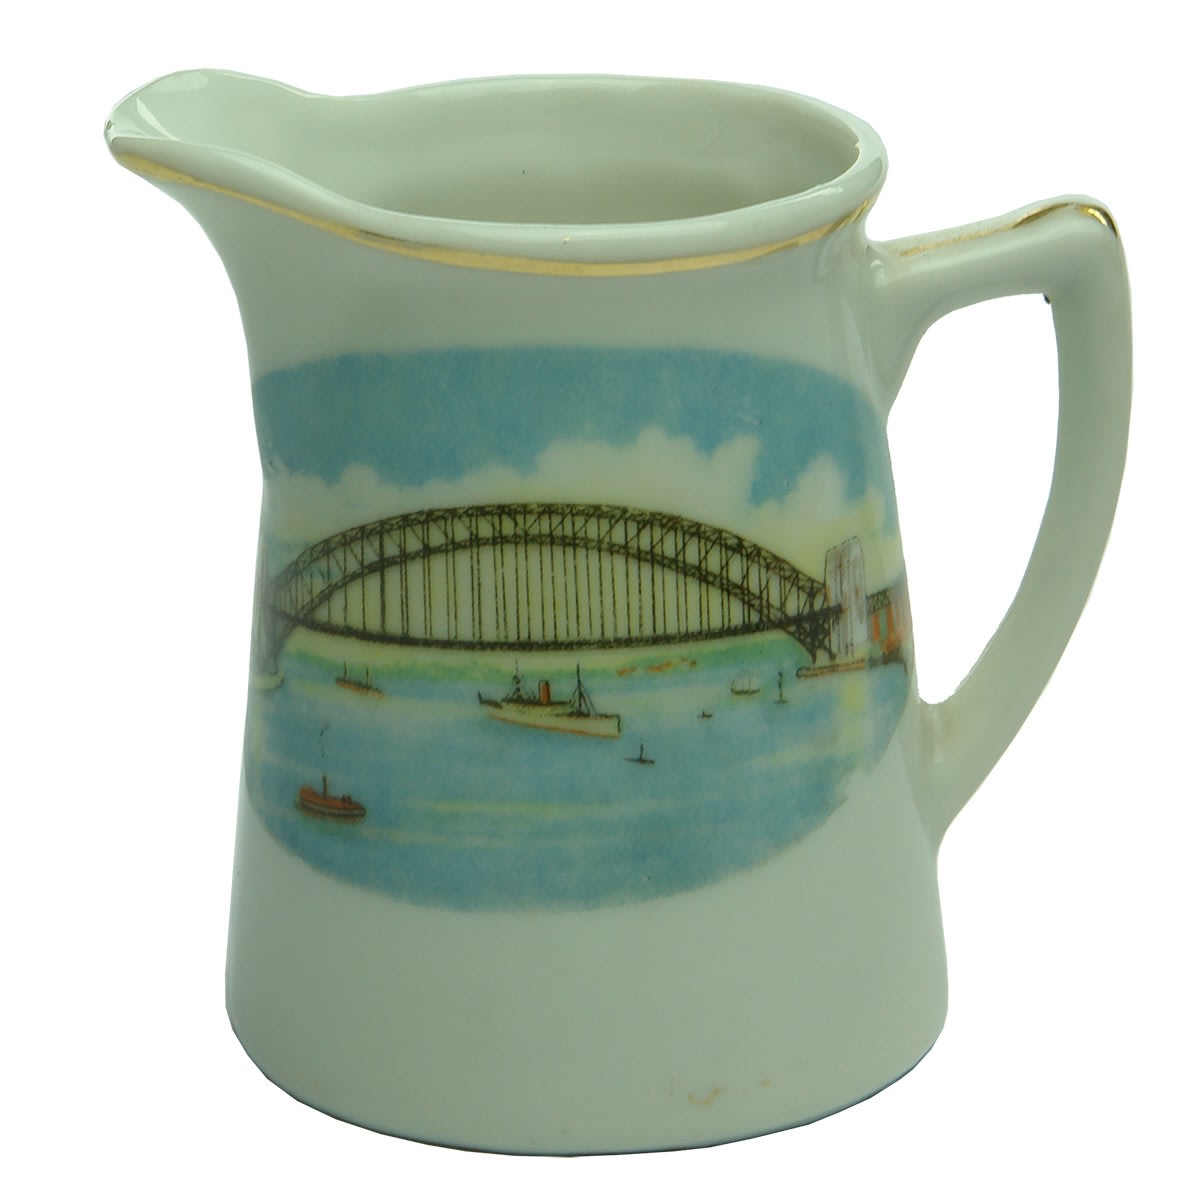 Souvenirware. Sydney Harbour Bridge. Small cream jug. (New South Wales).